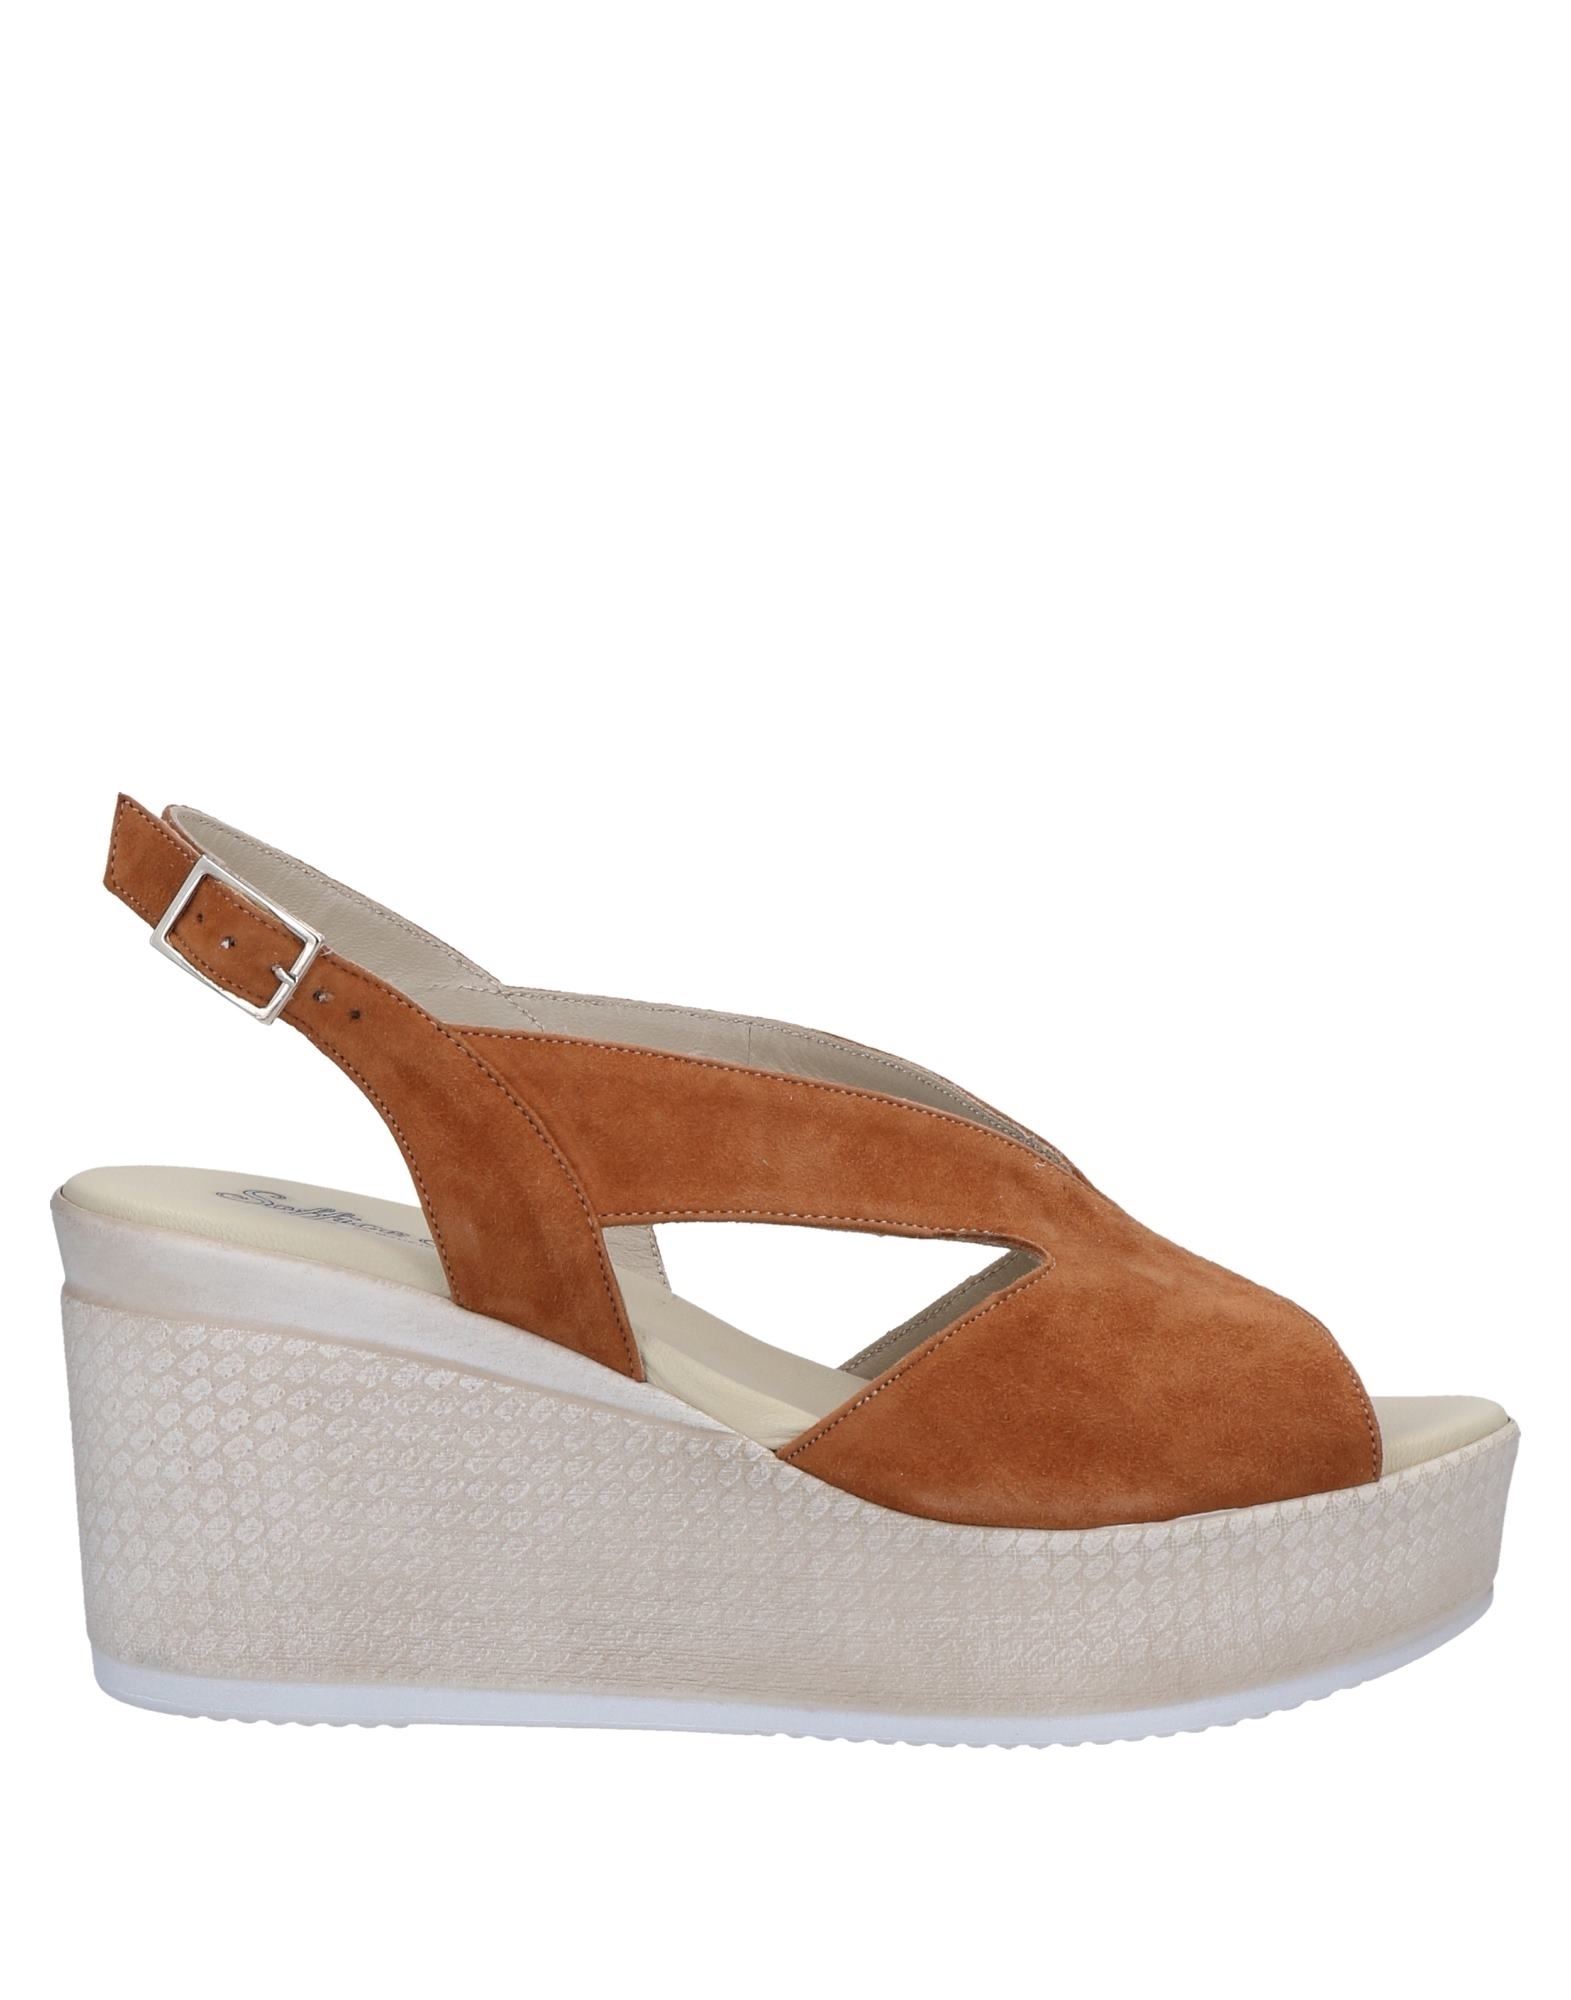 SOFFICE SOGNOSOFFICE SOGNO Sandals | DailyMail